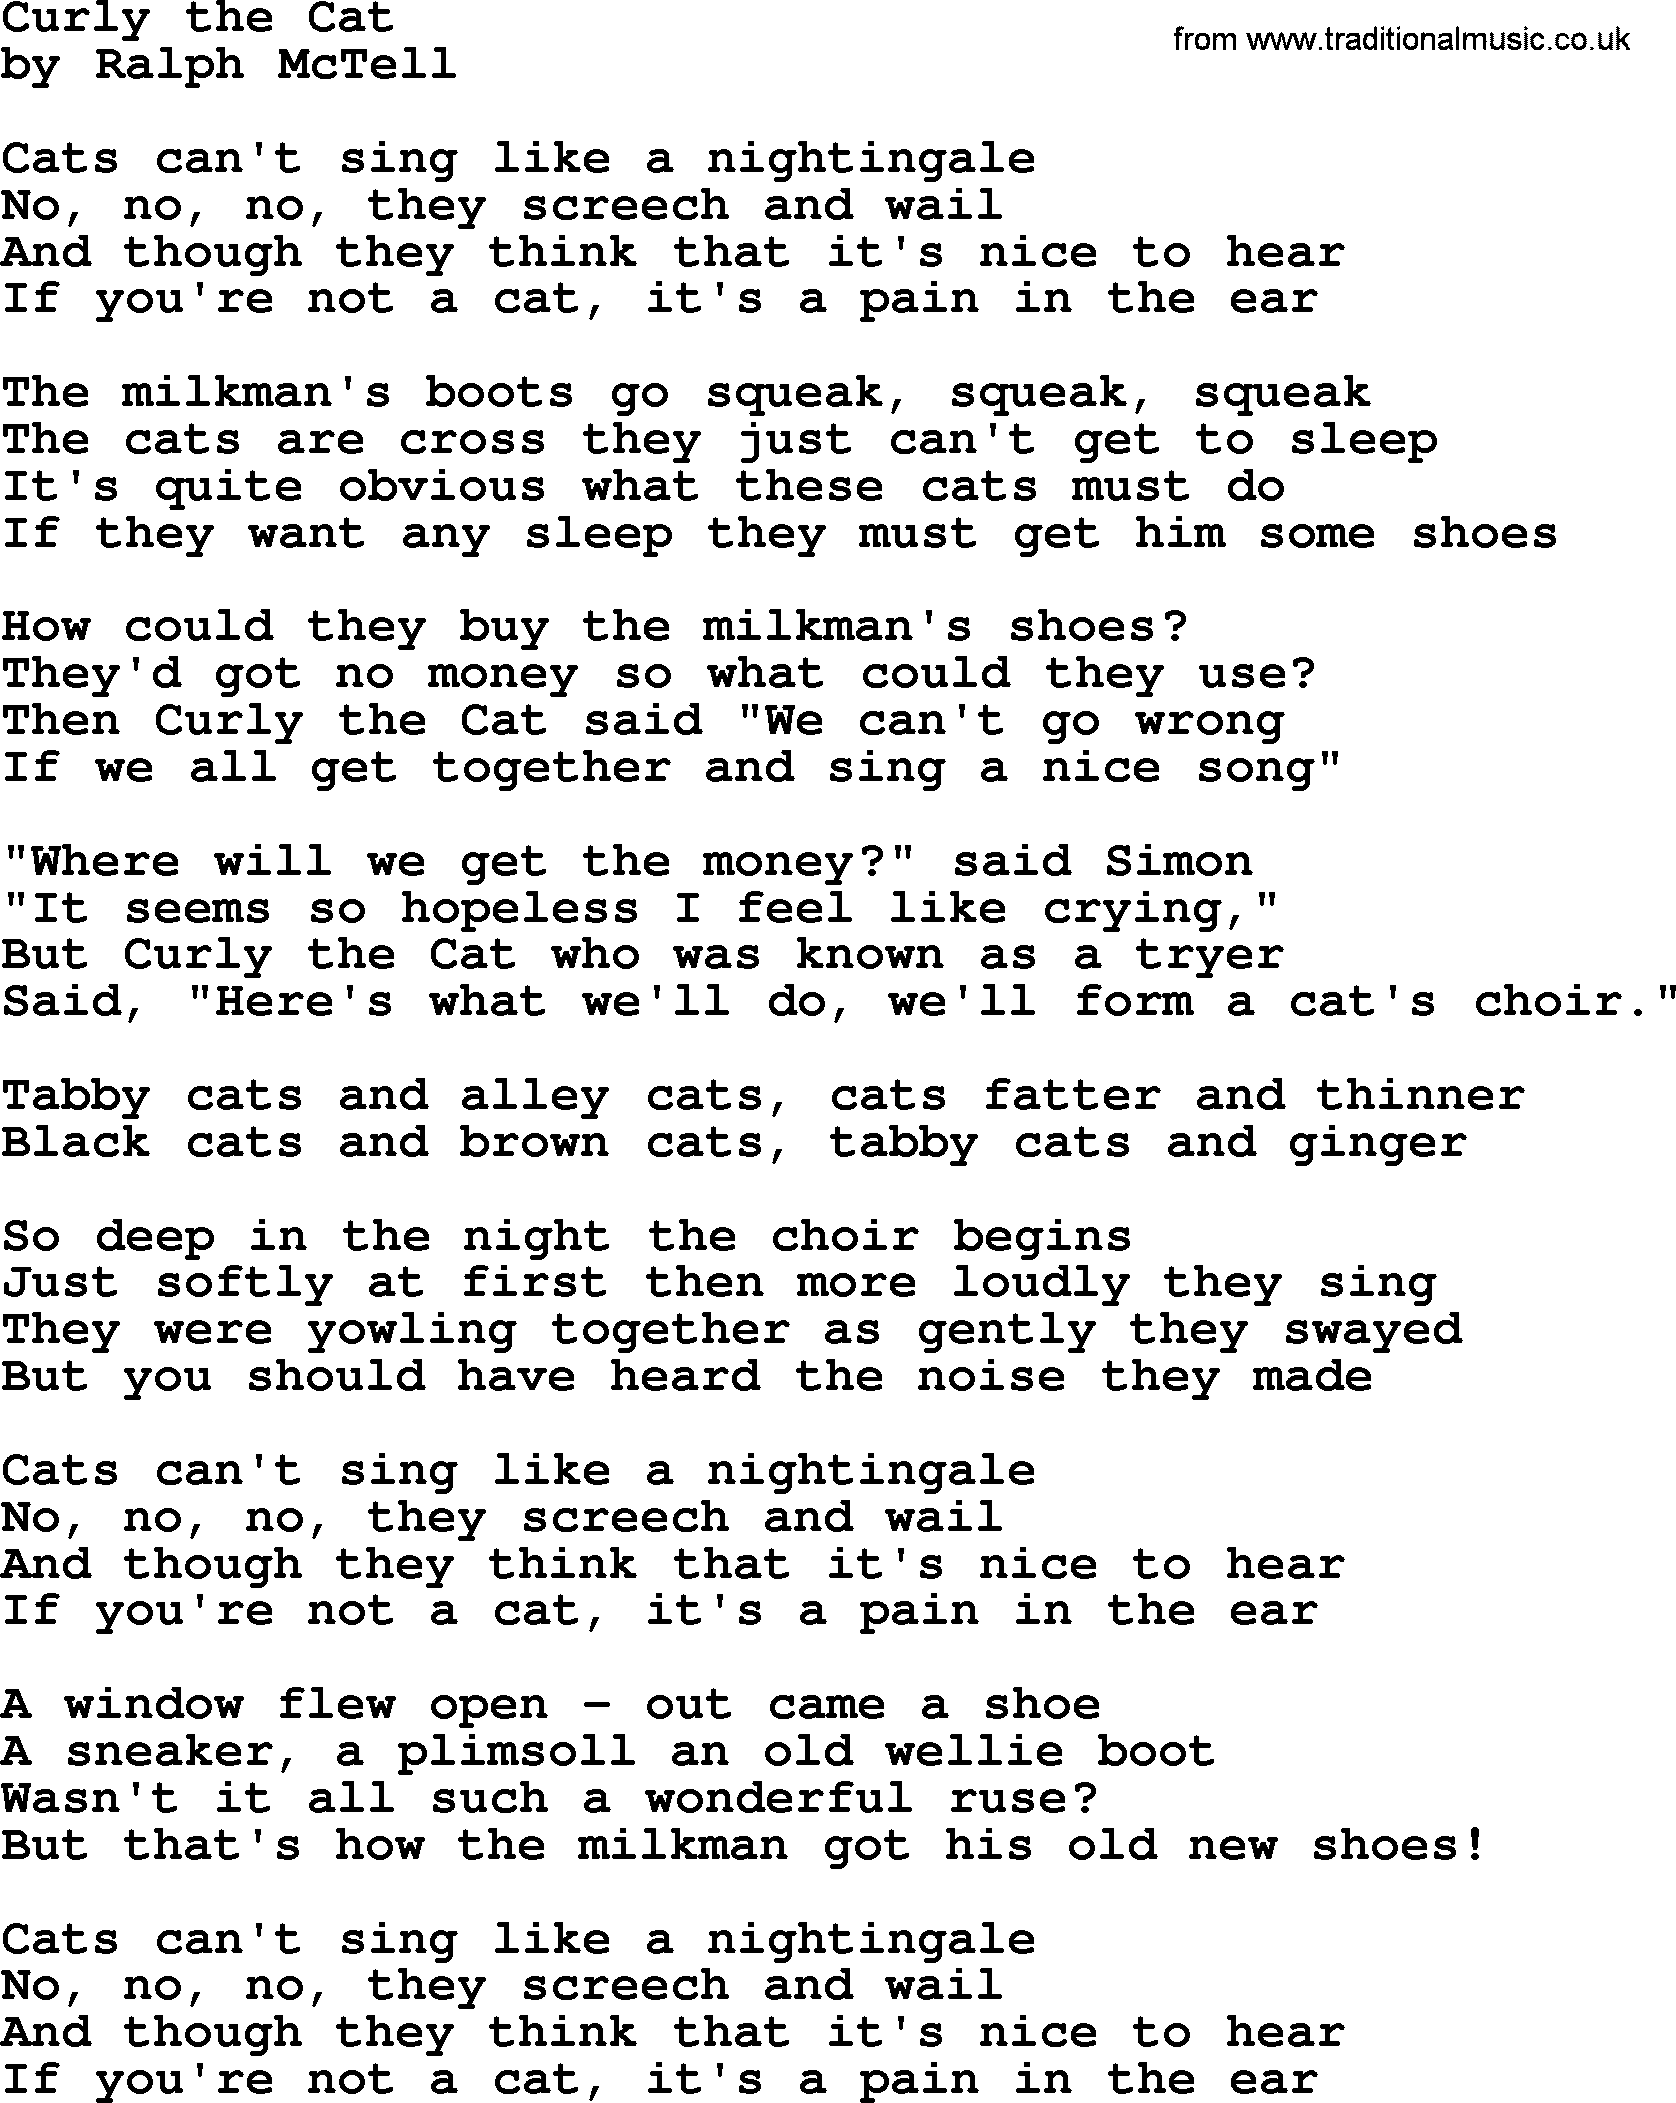 Ralph McTell Song: Curly The Cat, lyrics